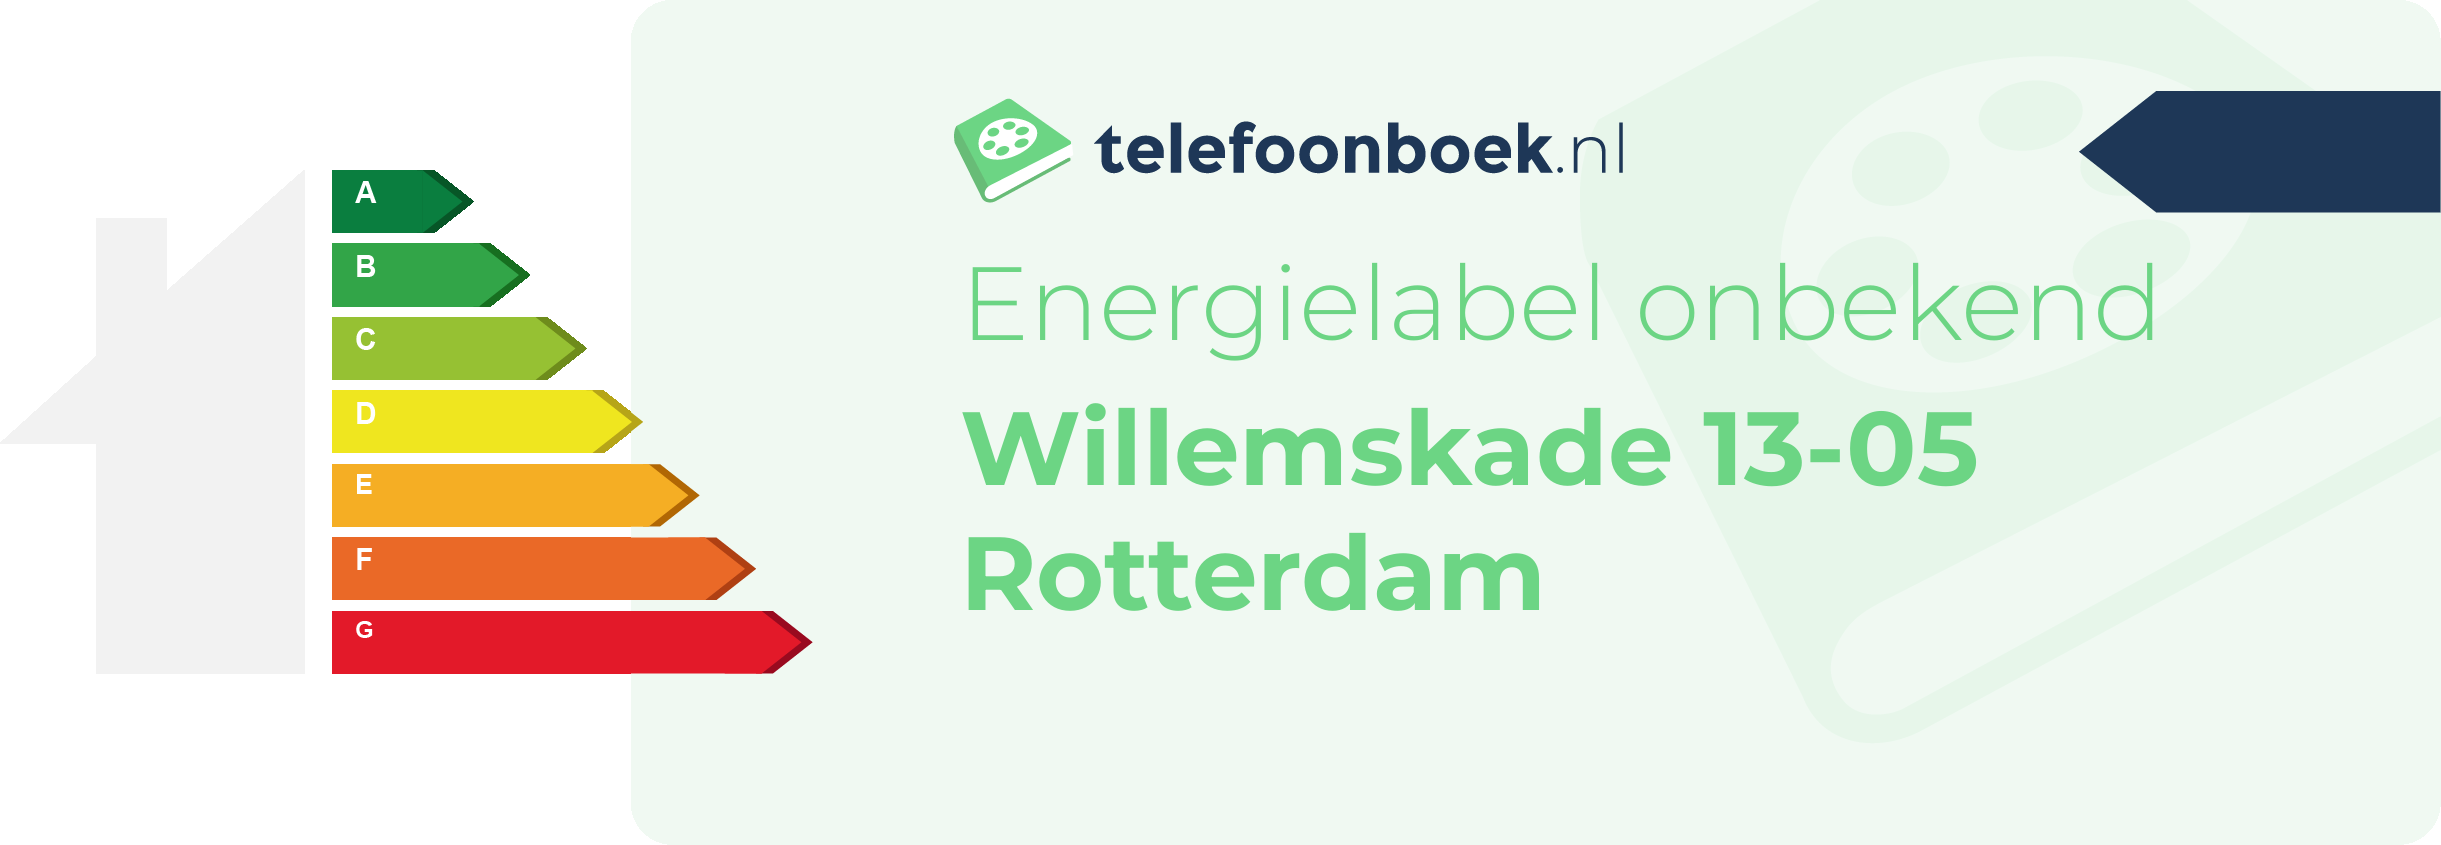 Energielabel Willemskade 13-05 Rotterdam